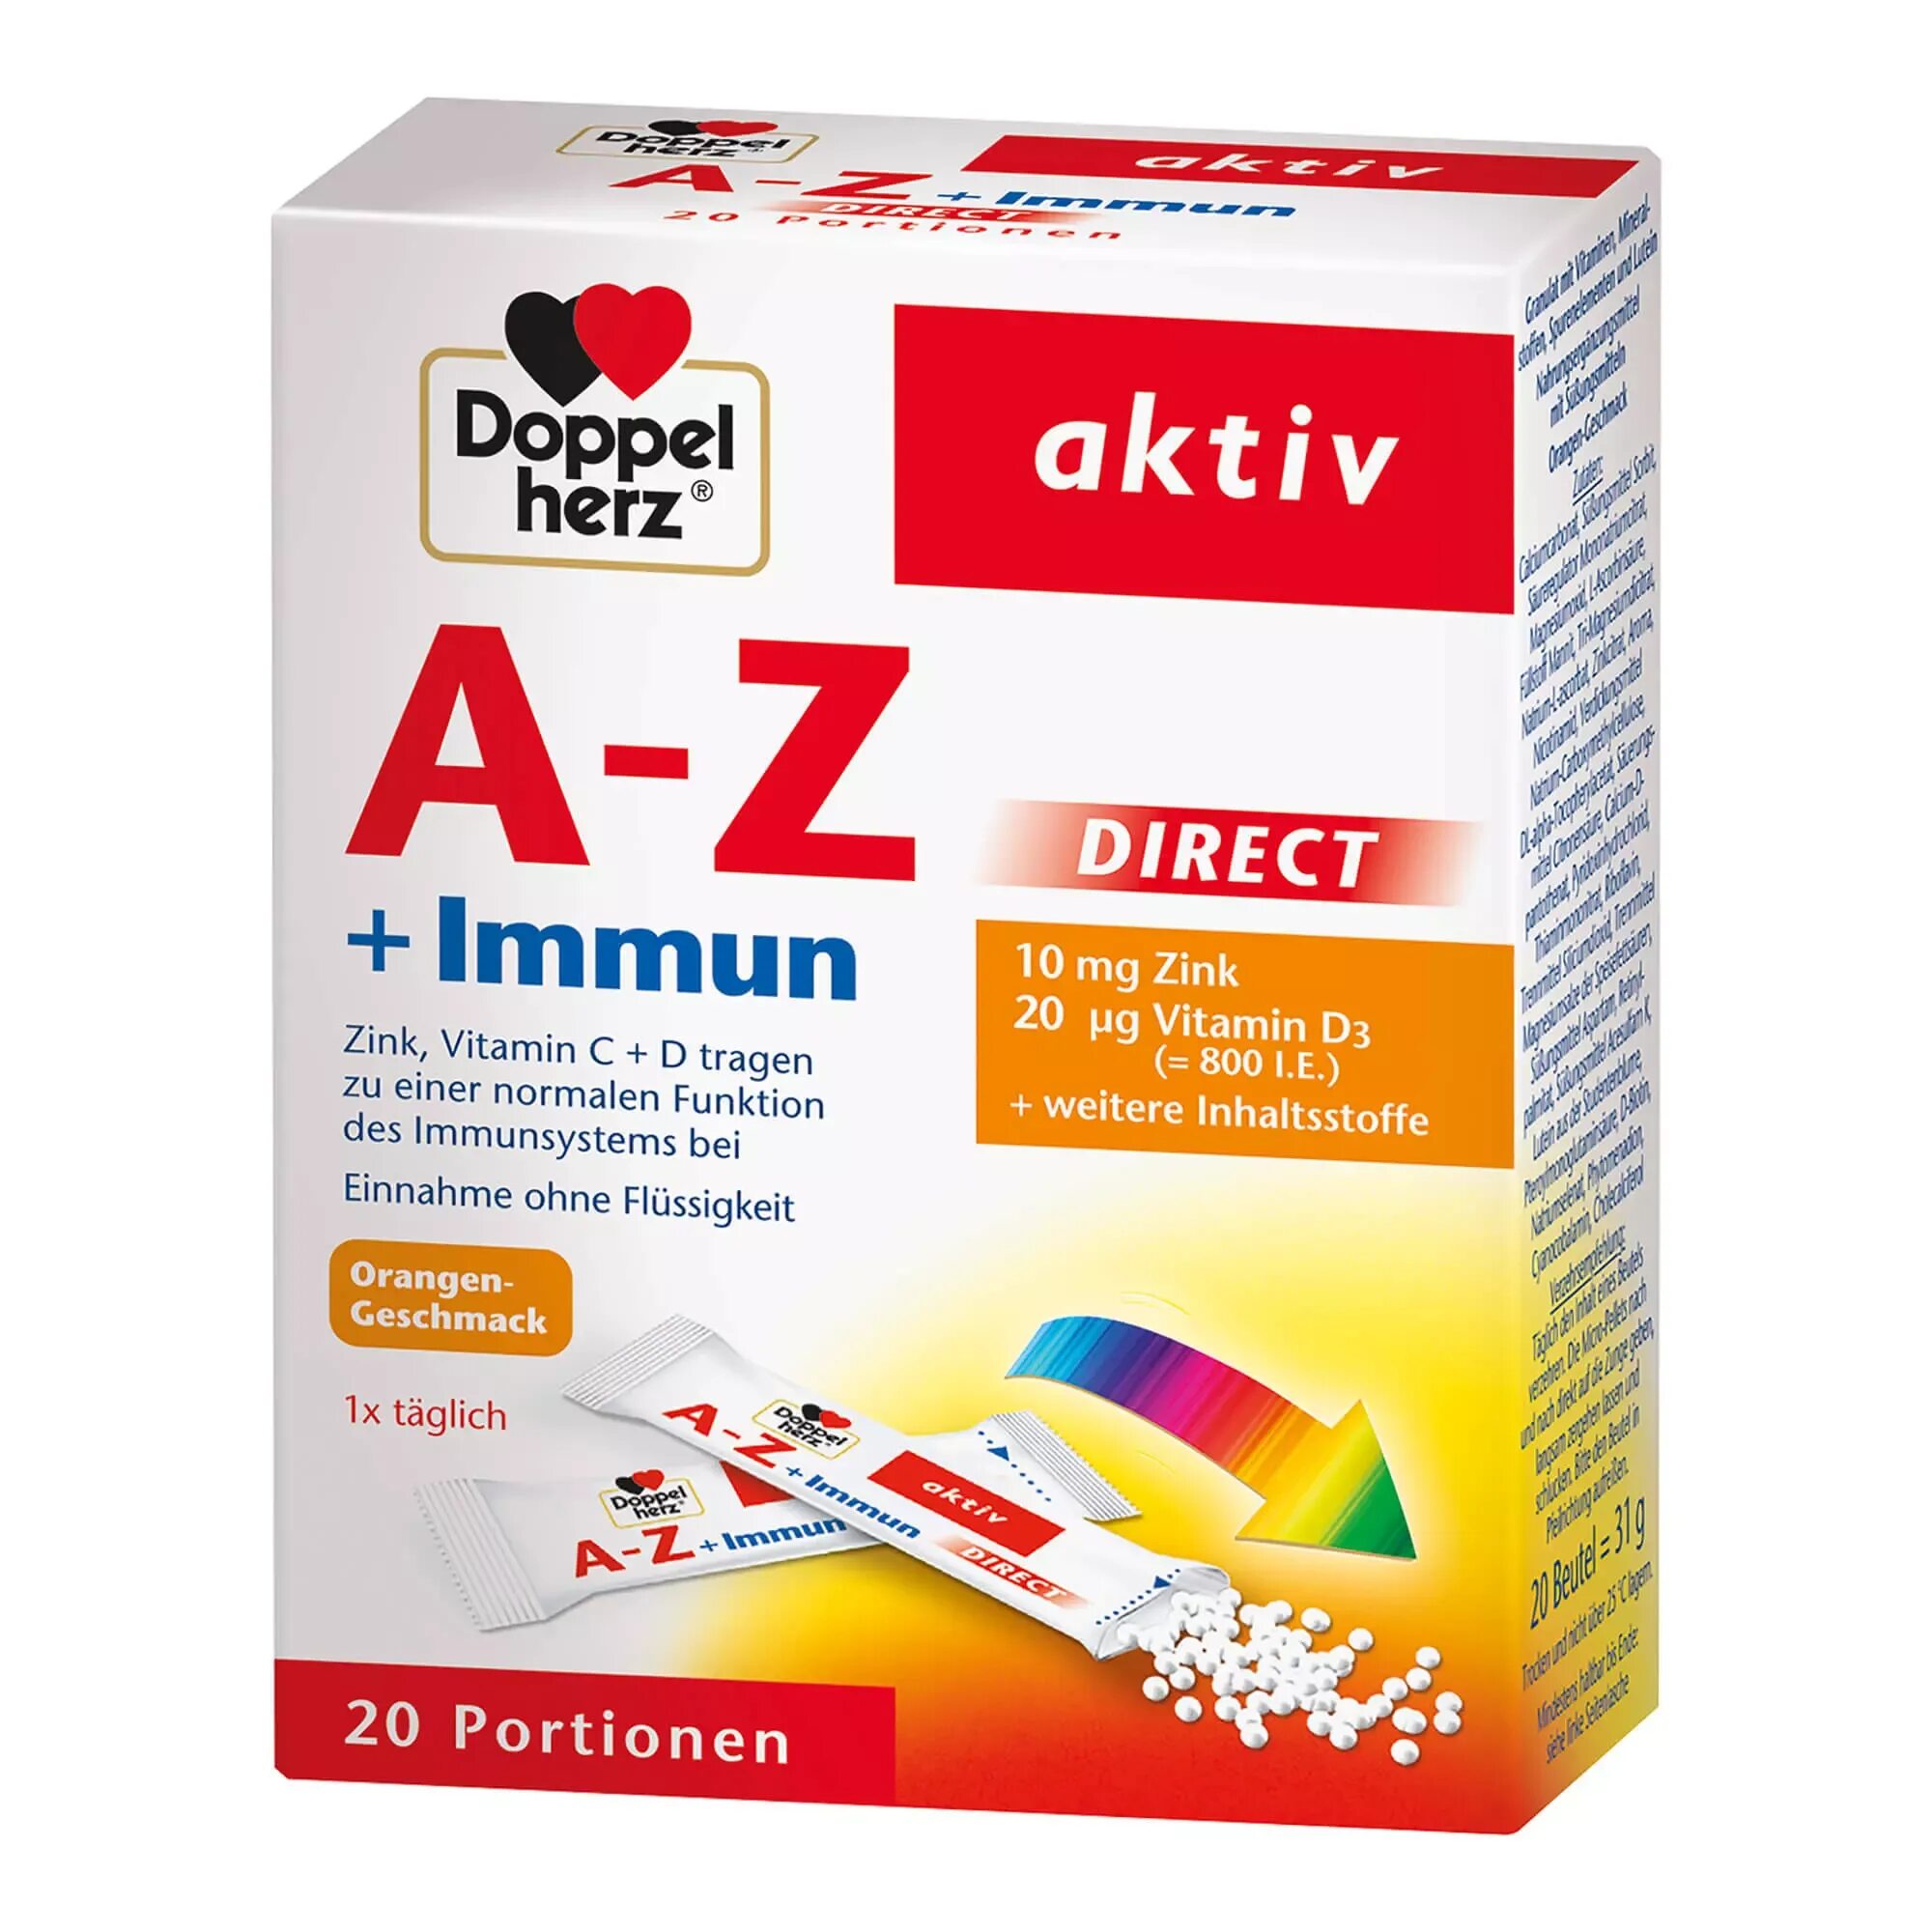 Иммун актив витамины. Doppel Herz a-z +Immun. A-Z aktiv это. A-Z complete витамины. Doppel Herz Актив при простуде.